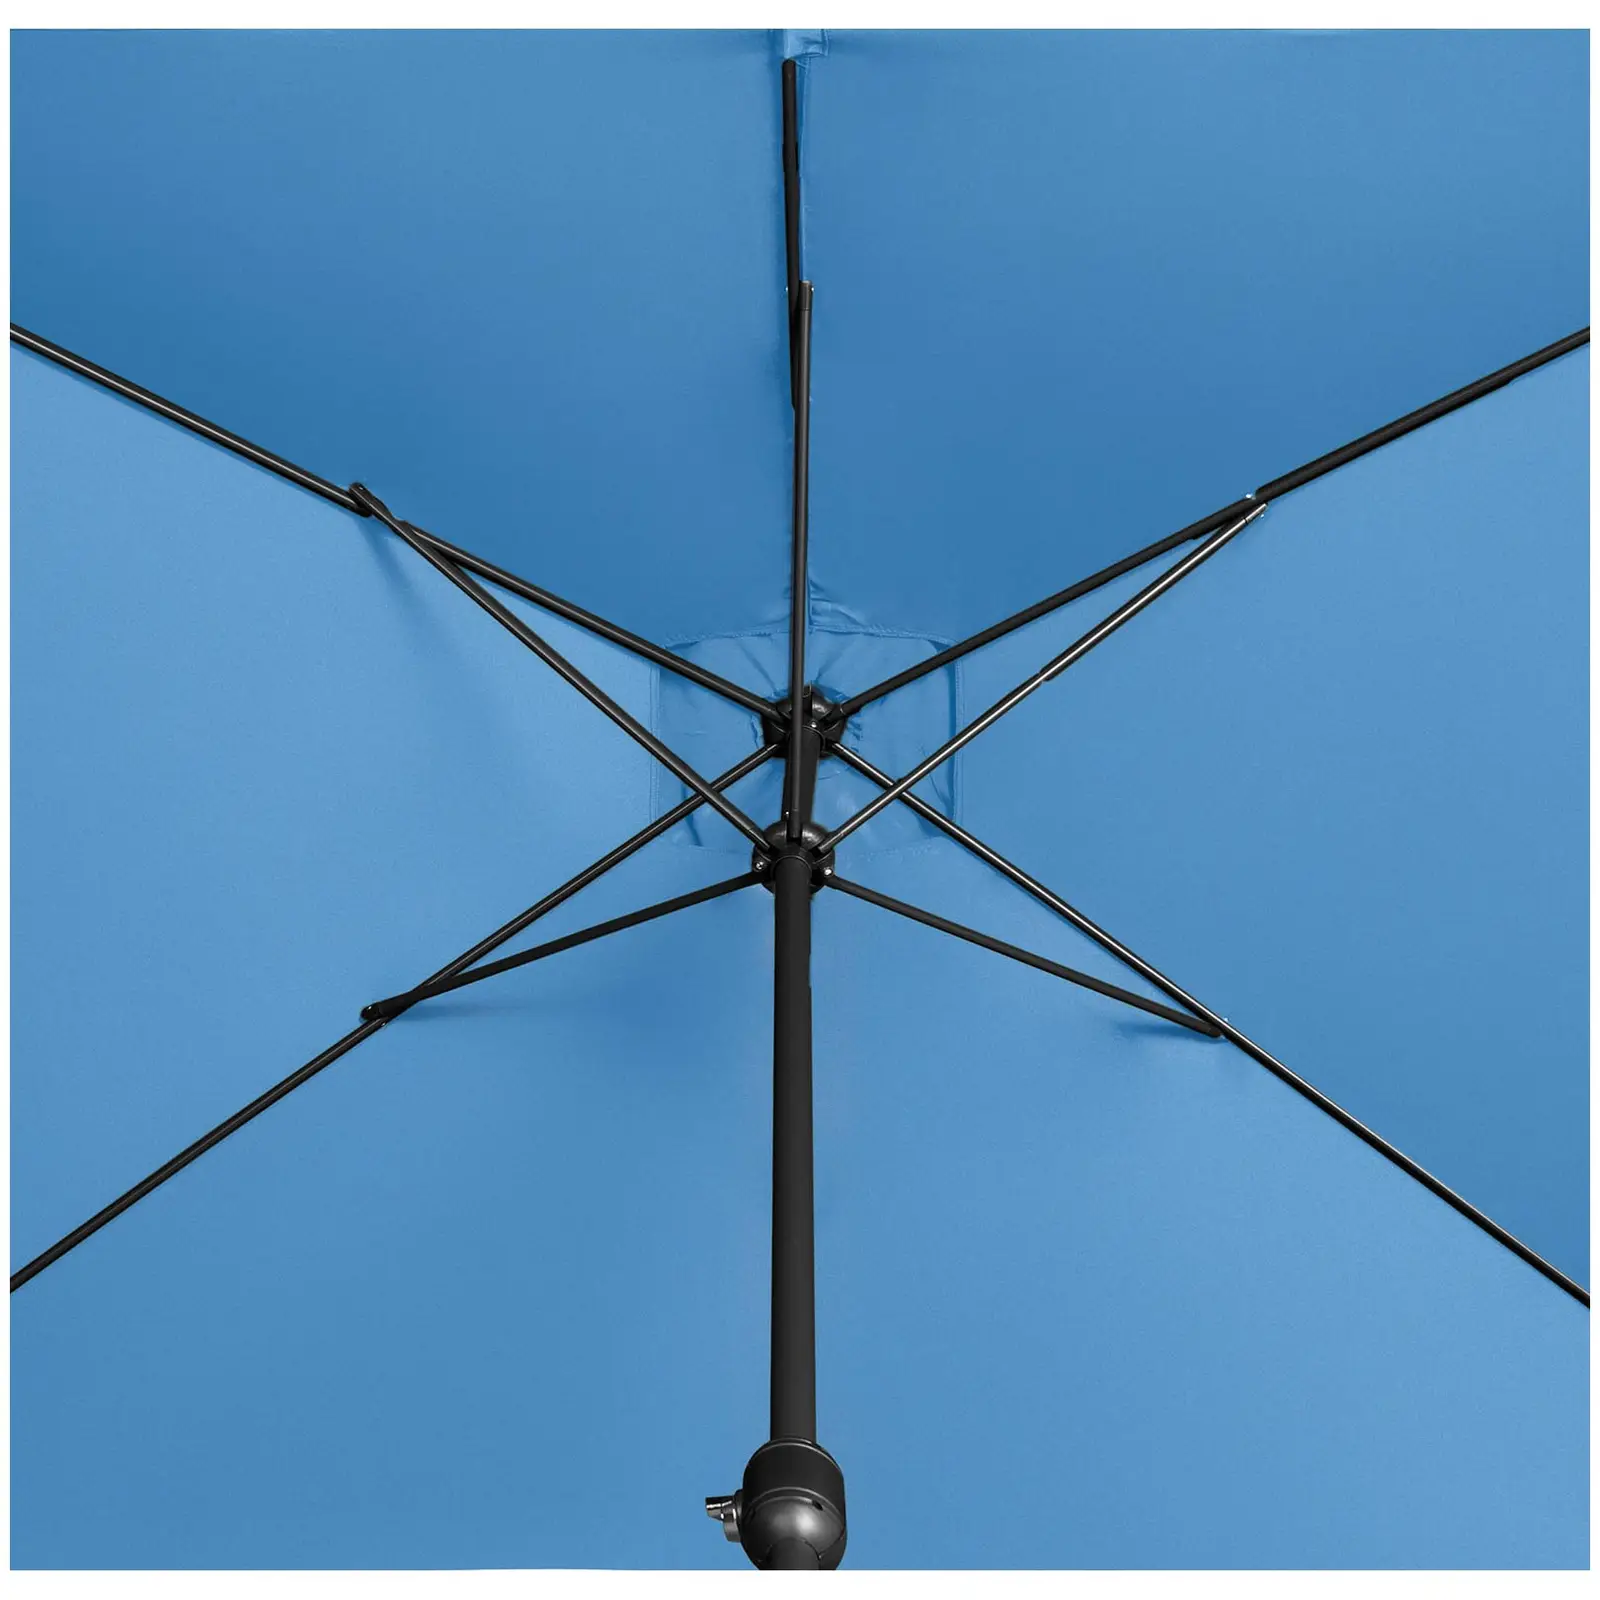 Factory second Large Outdoor Umbrella - blue - rectangular - 200 x 300 cm